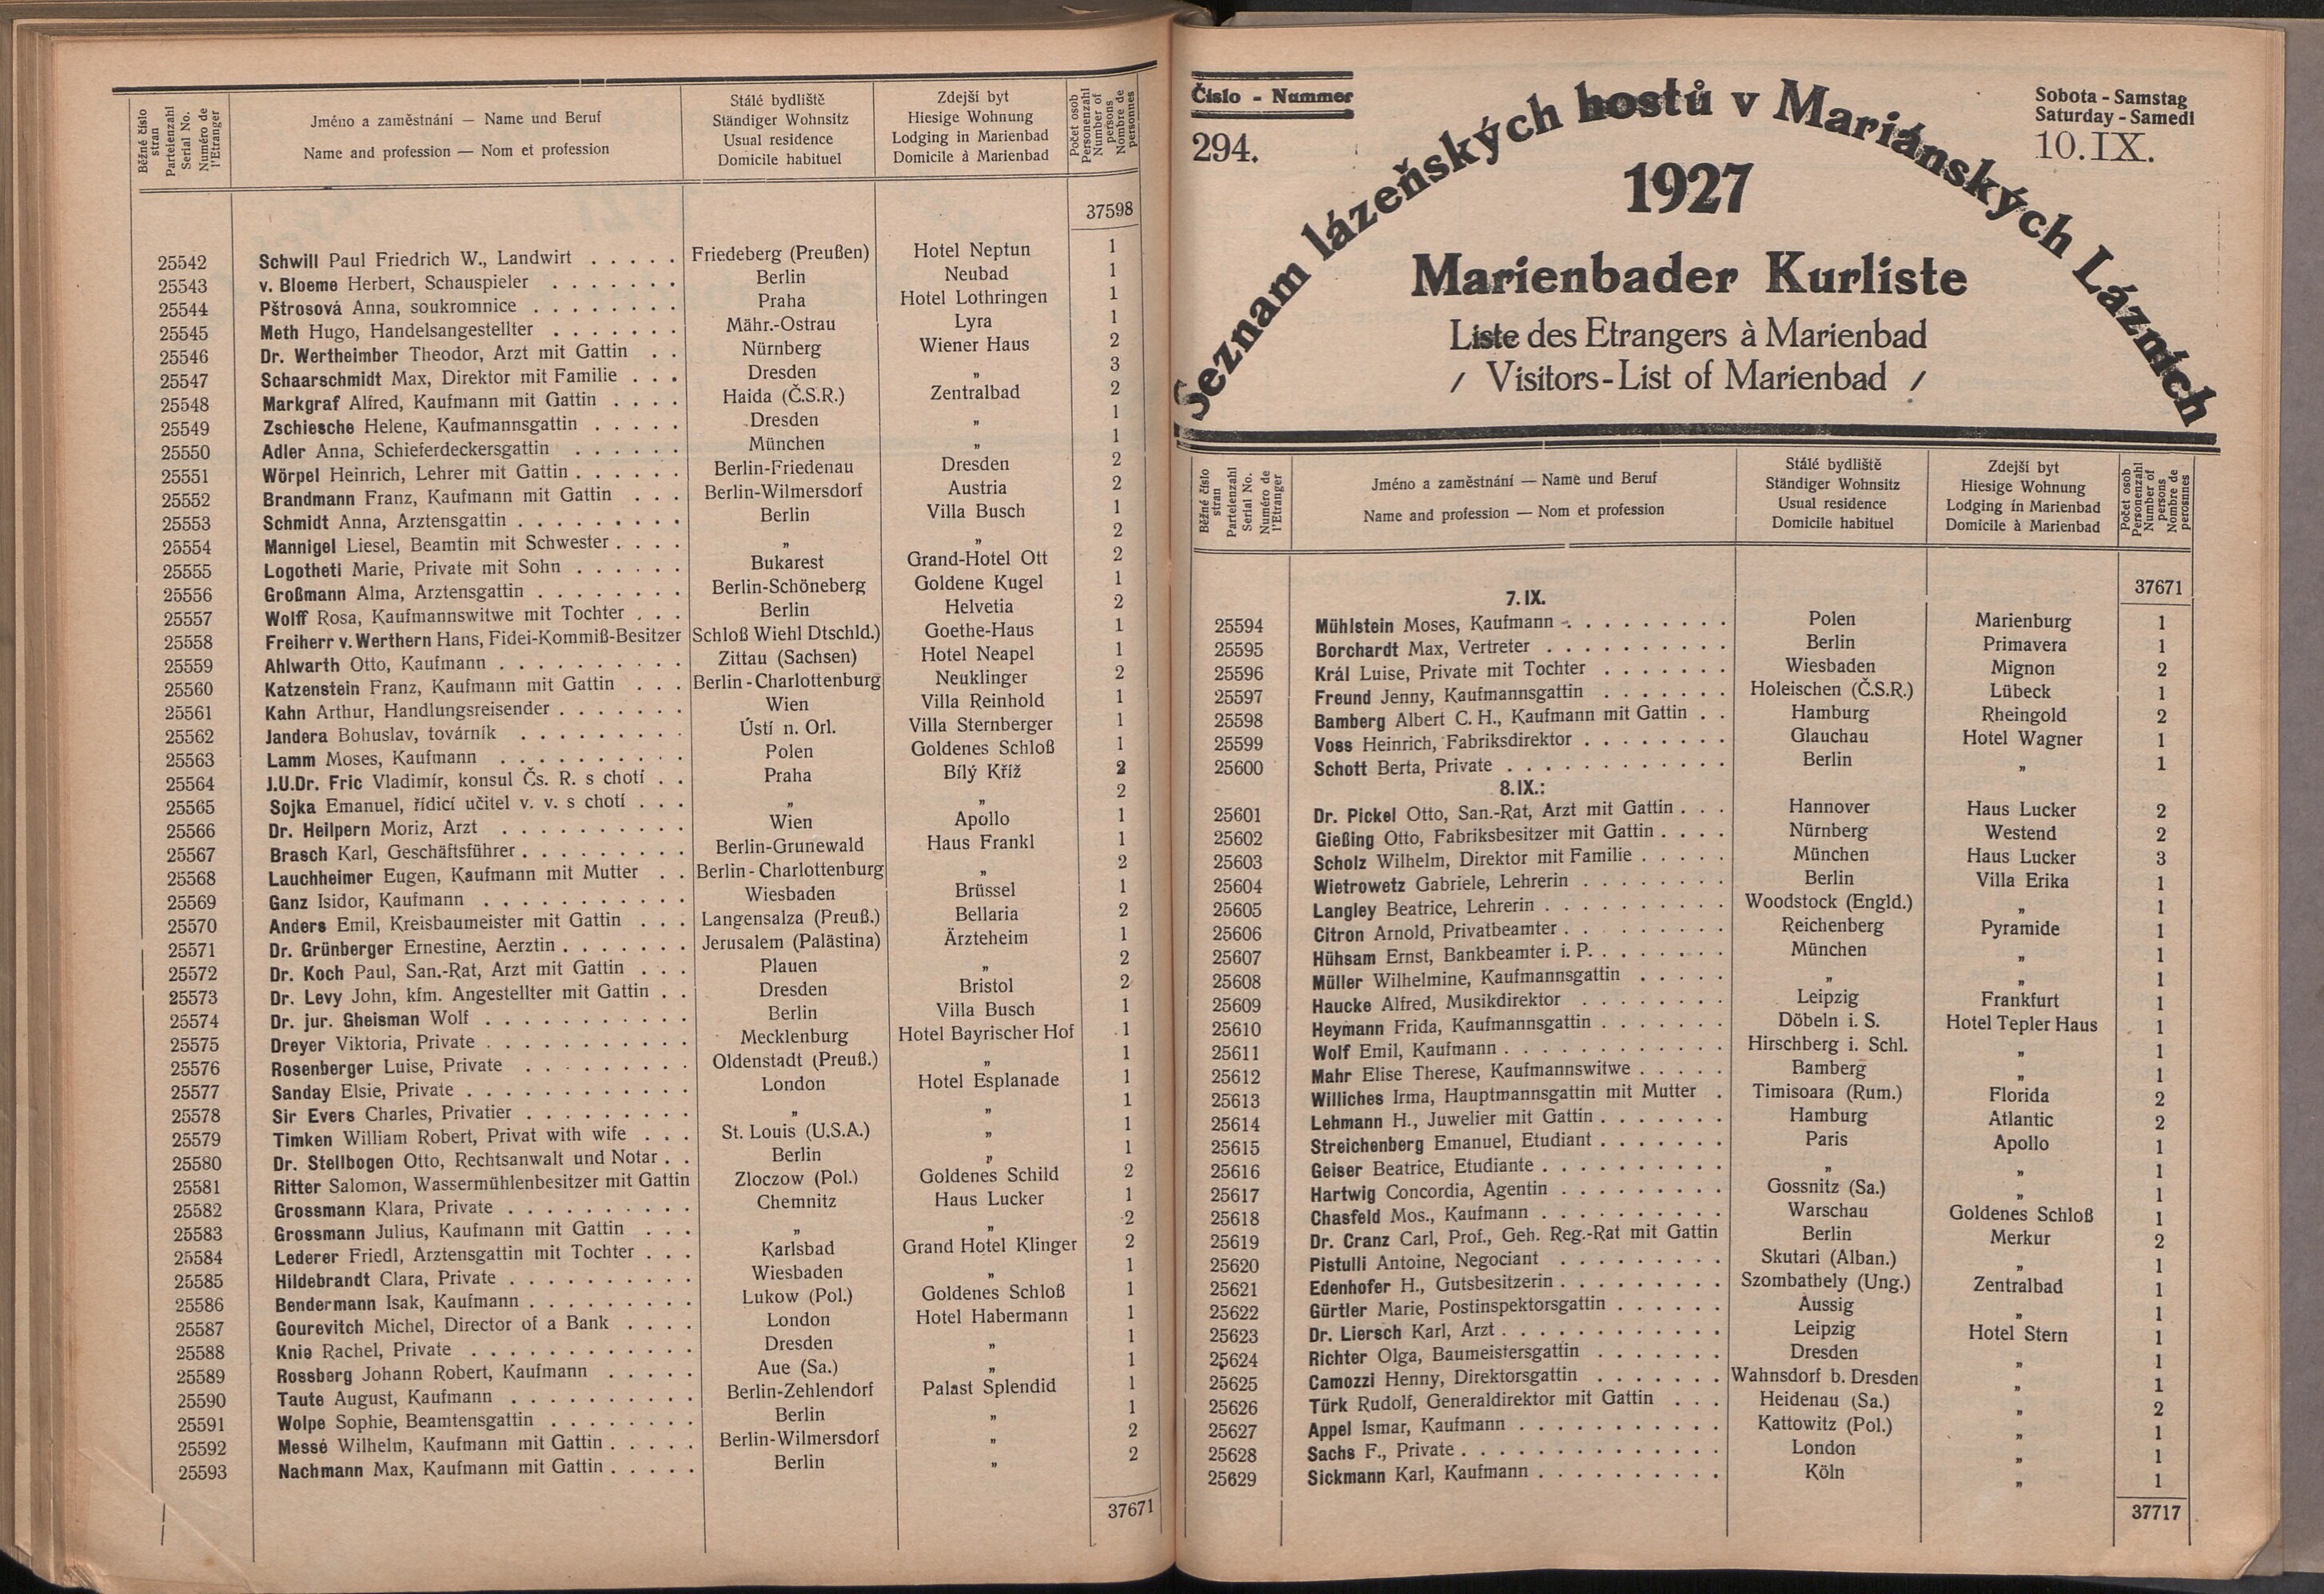 376. soap-ch_knihovna_marienbader-kurliste-1927_3760